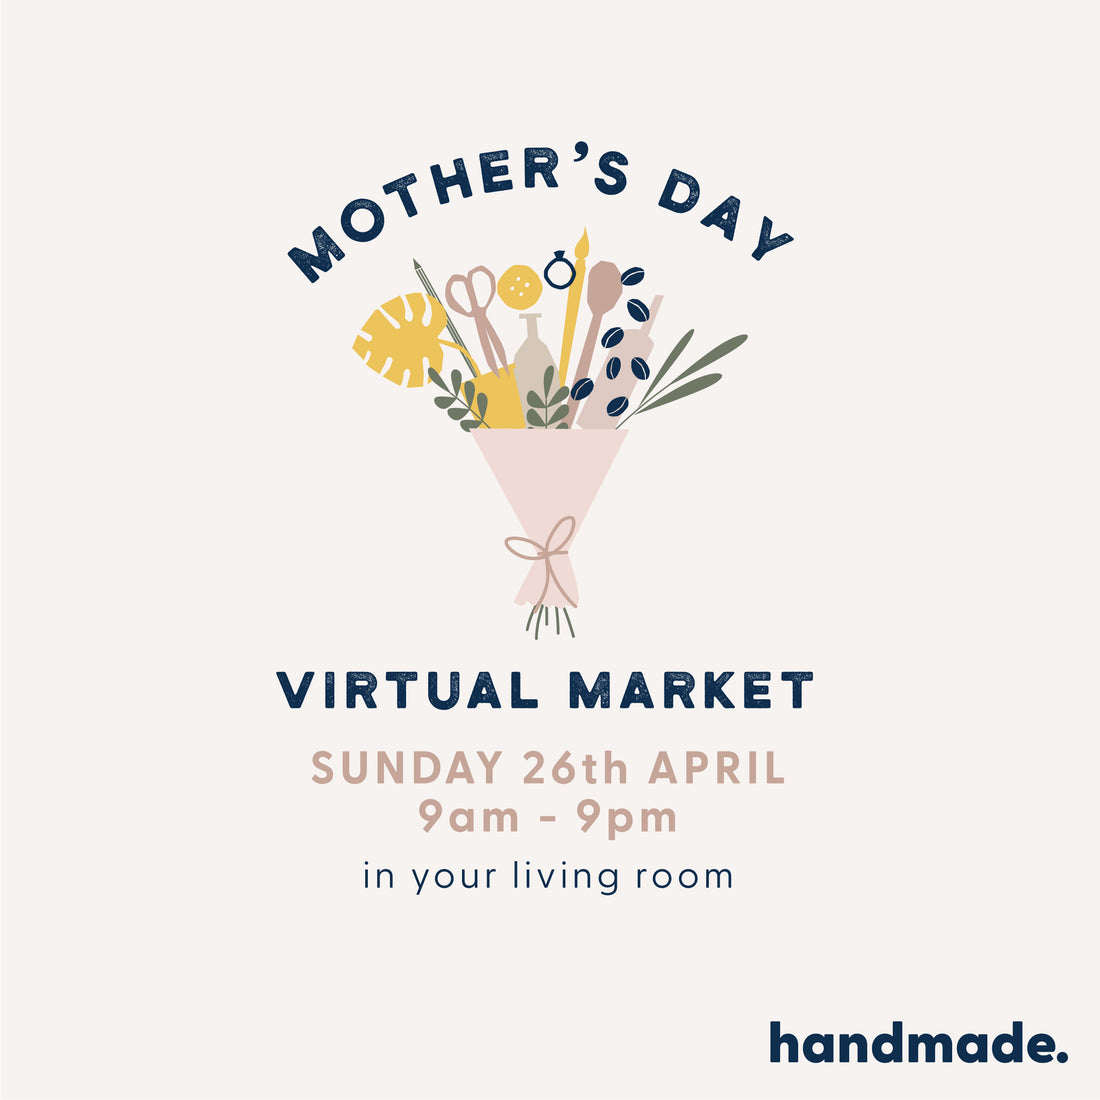 Handmade Virtual Market this Sunday!